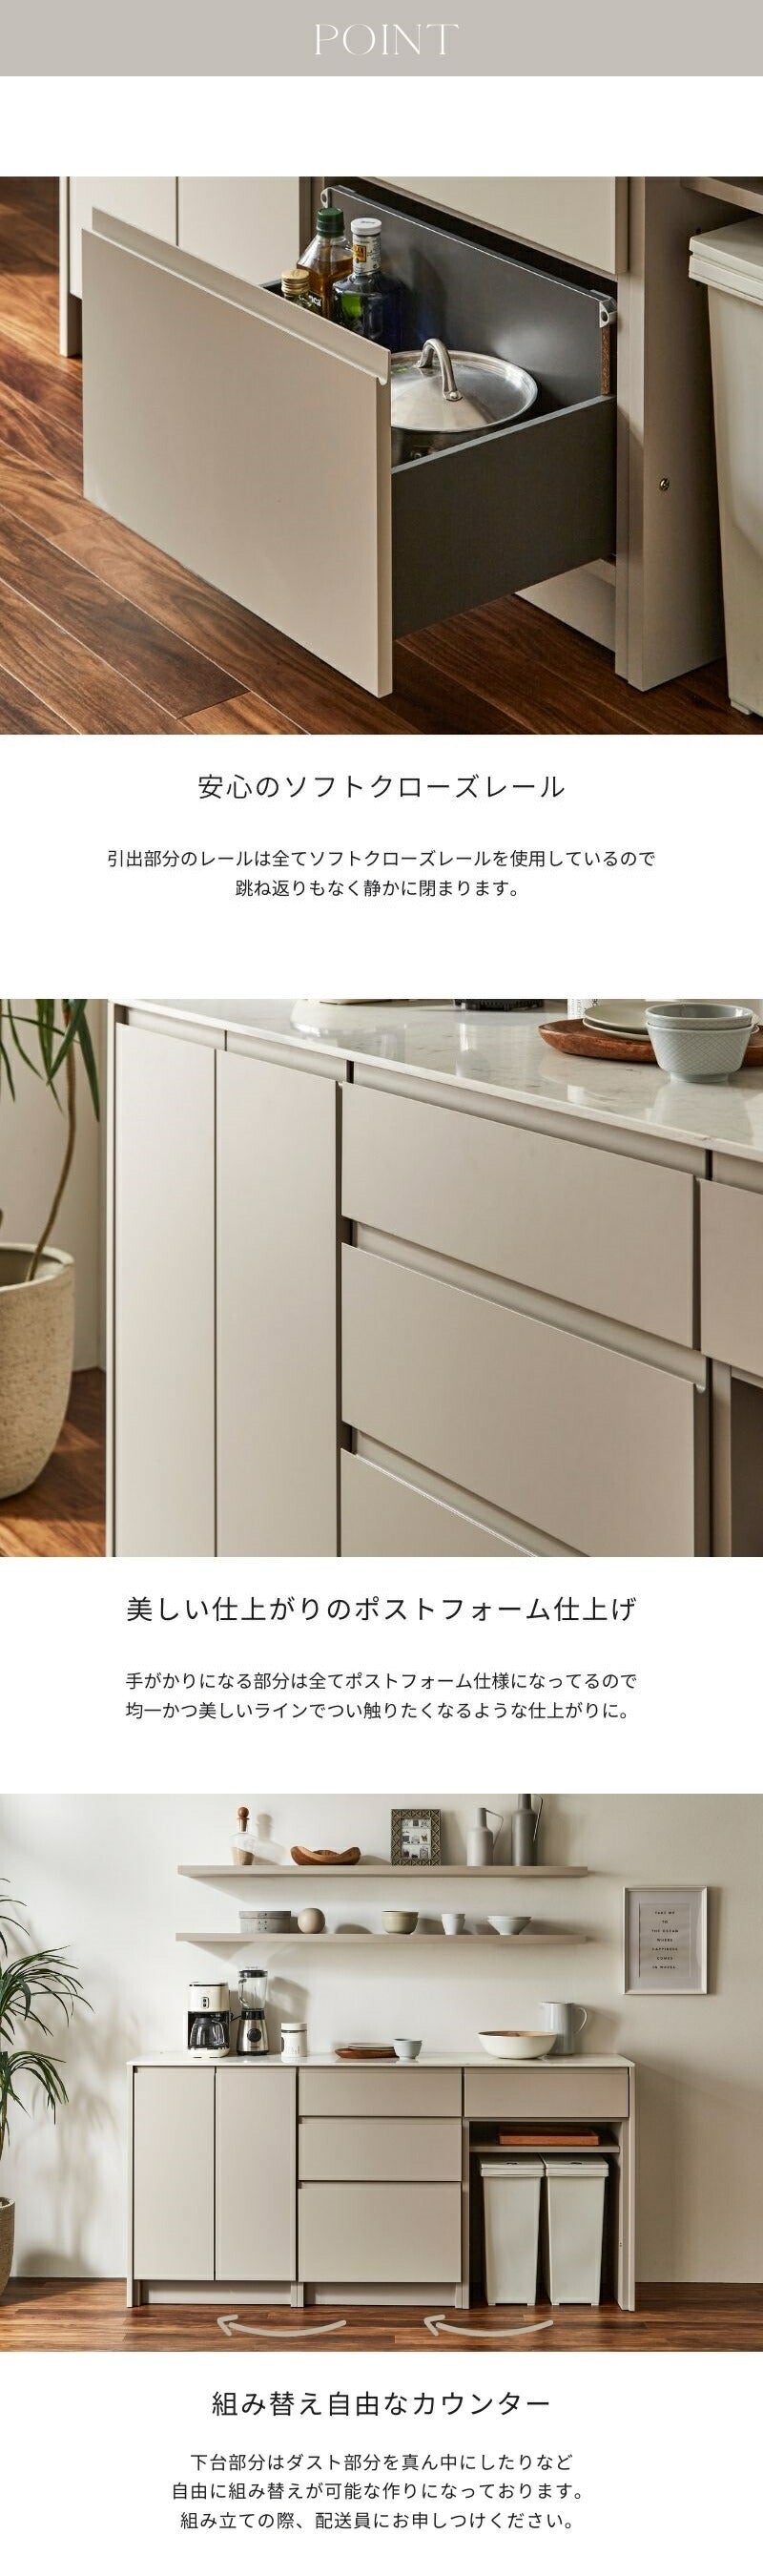 KM-59【ご来店頂ける方限定】レンジボード 白 - 広島県の家具